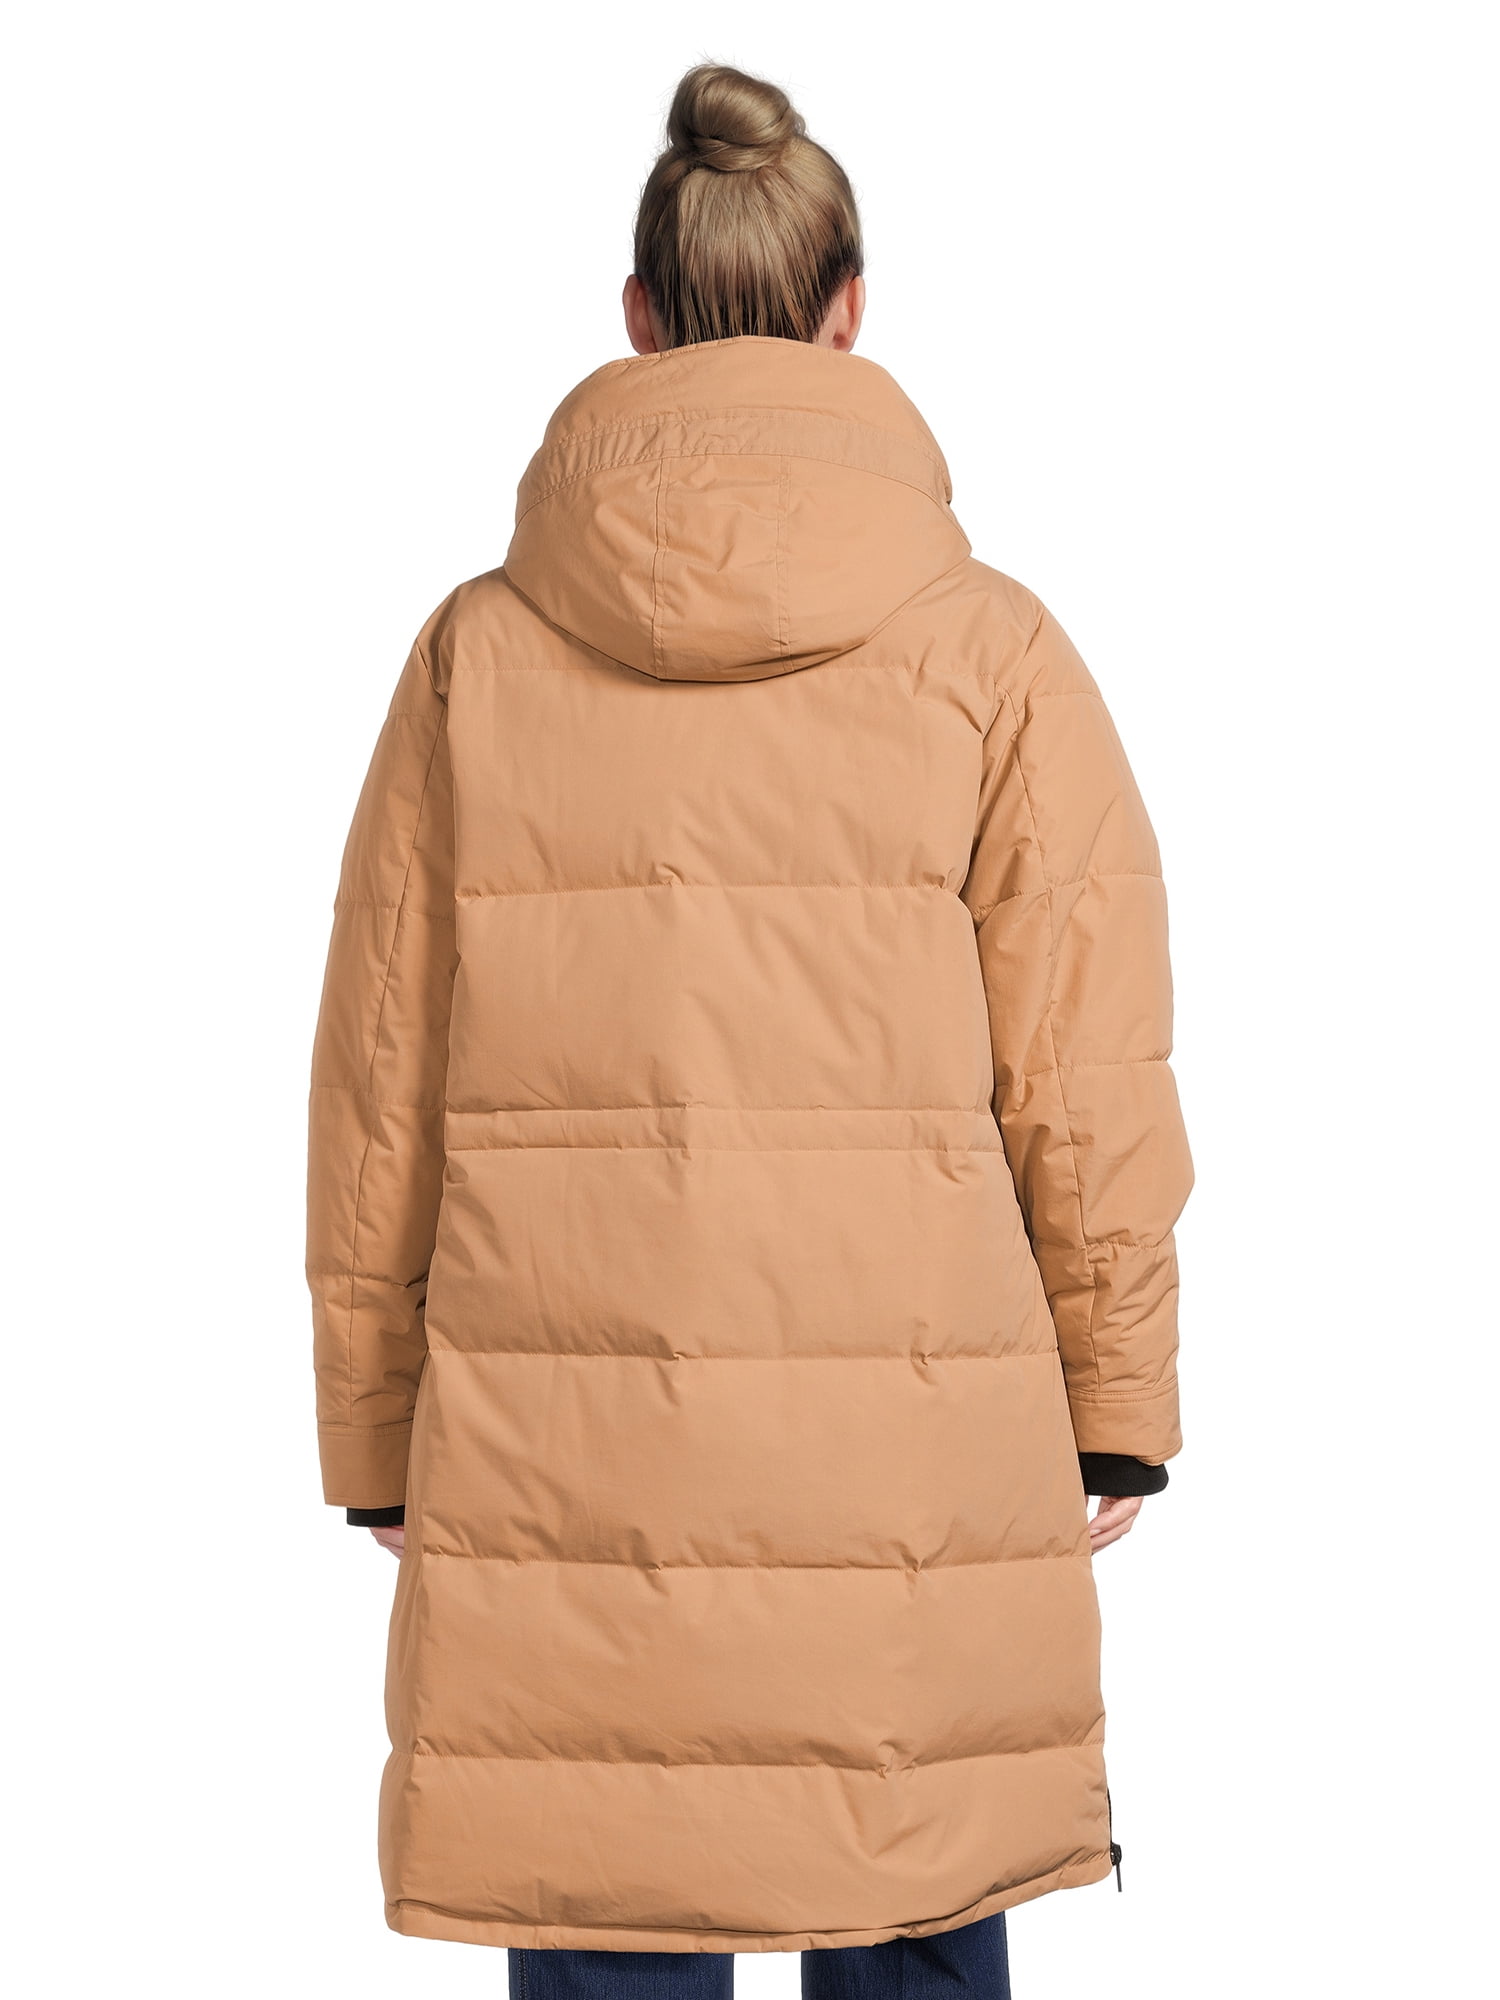 Swiss Tech Women's Ultra Long Parka Jacket, Sizes XS-3X - Walmart.com